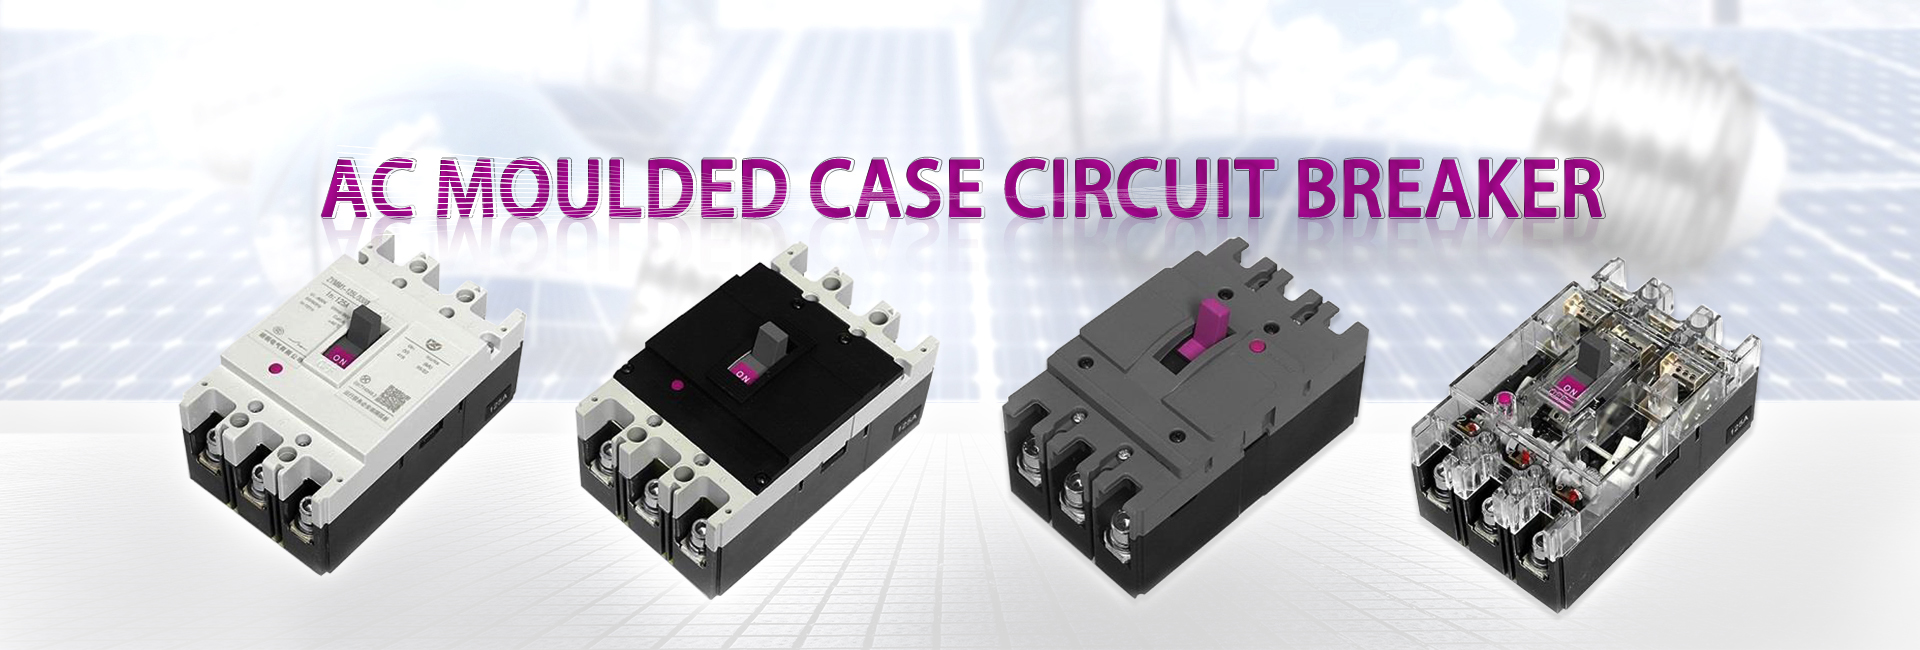 Moulded Case Circuit Breaker